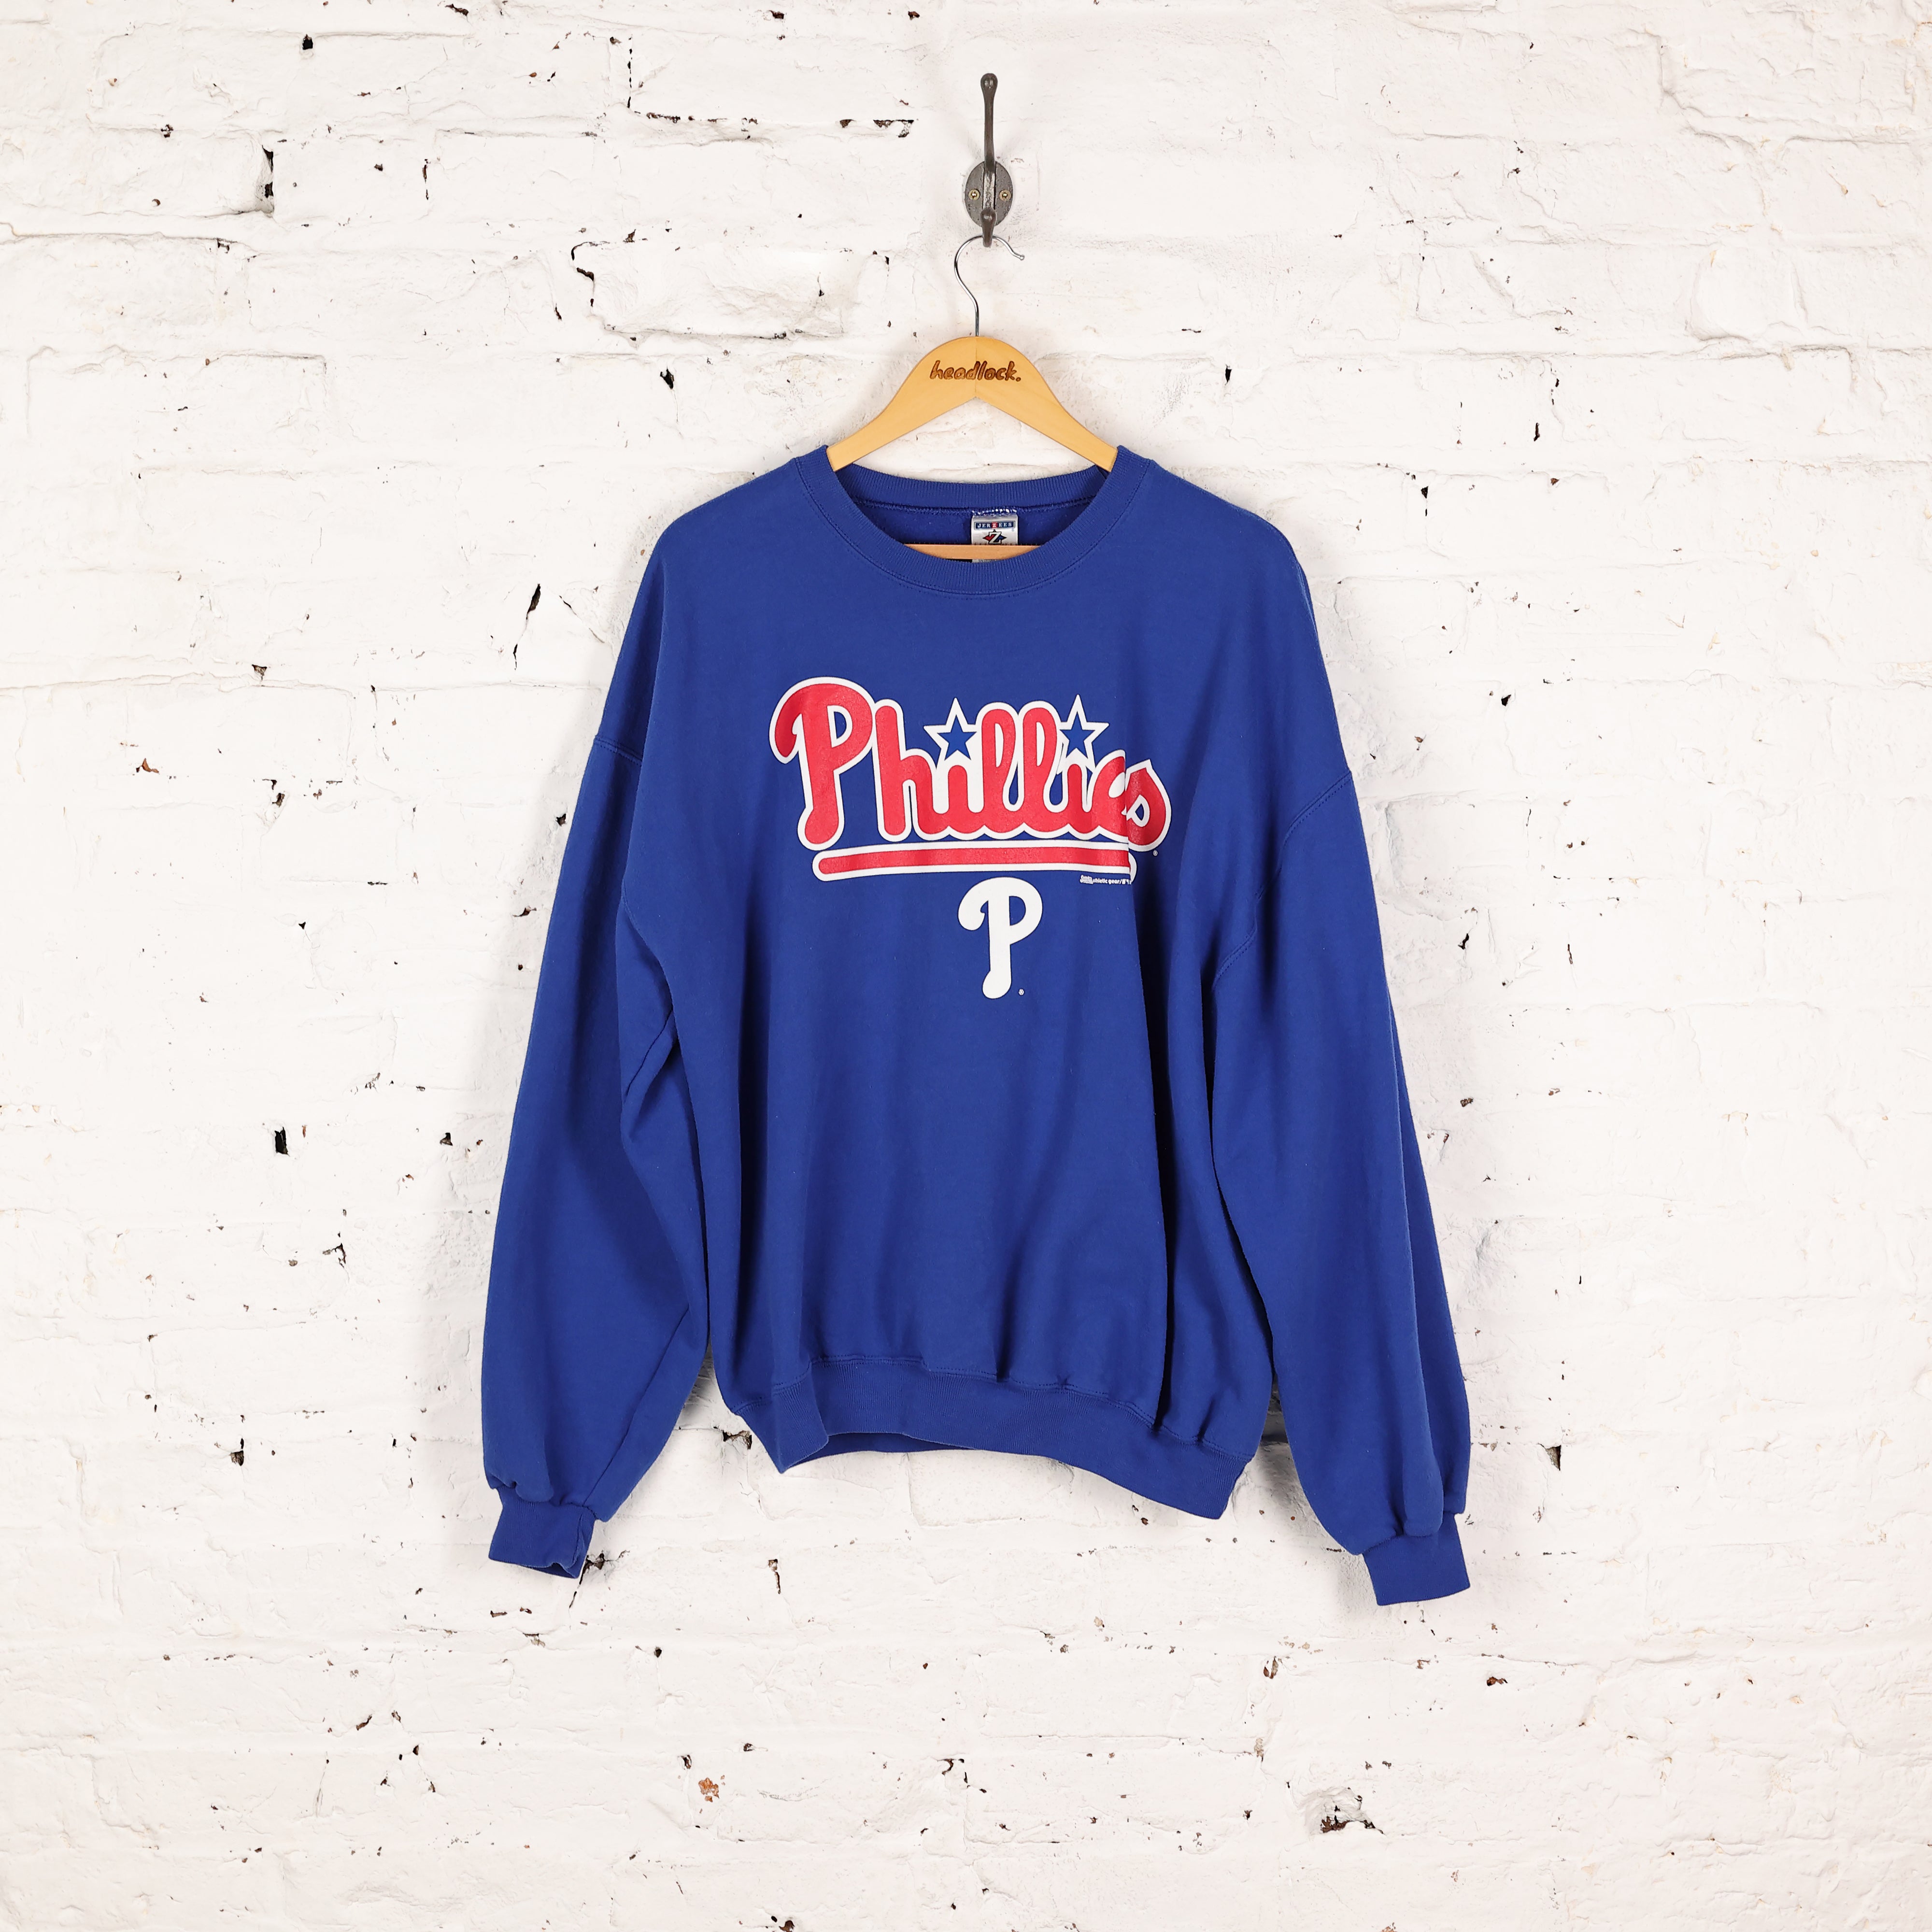 phillies baseball sweatshirt